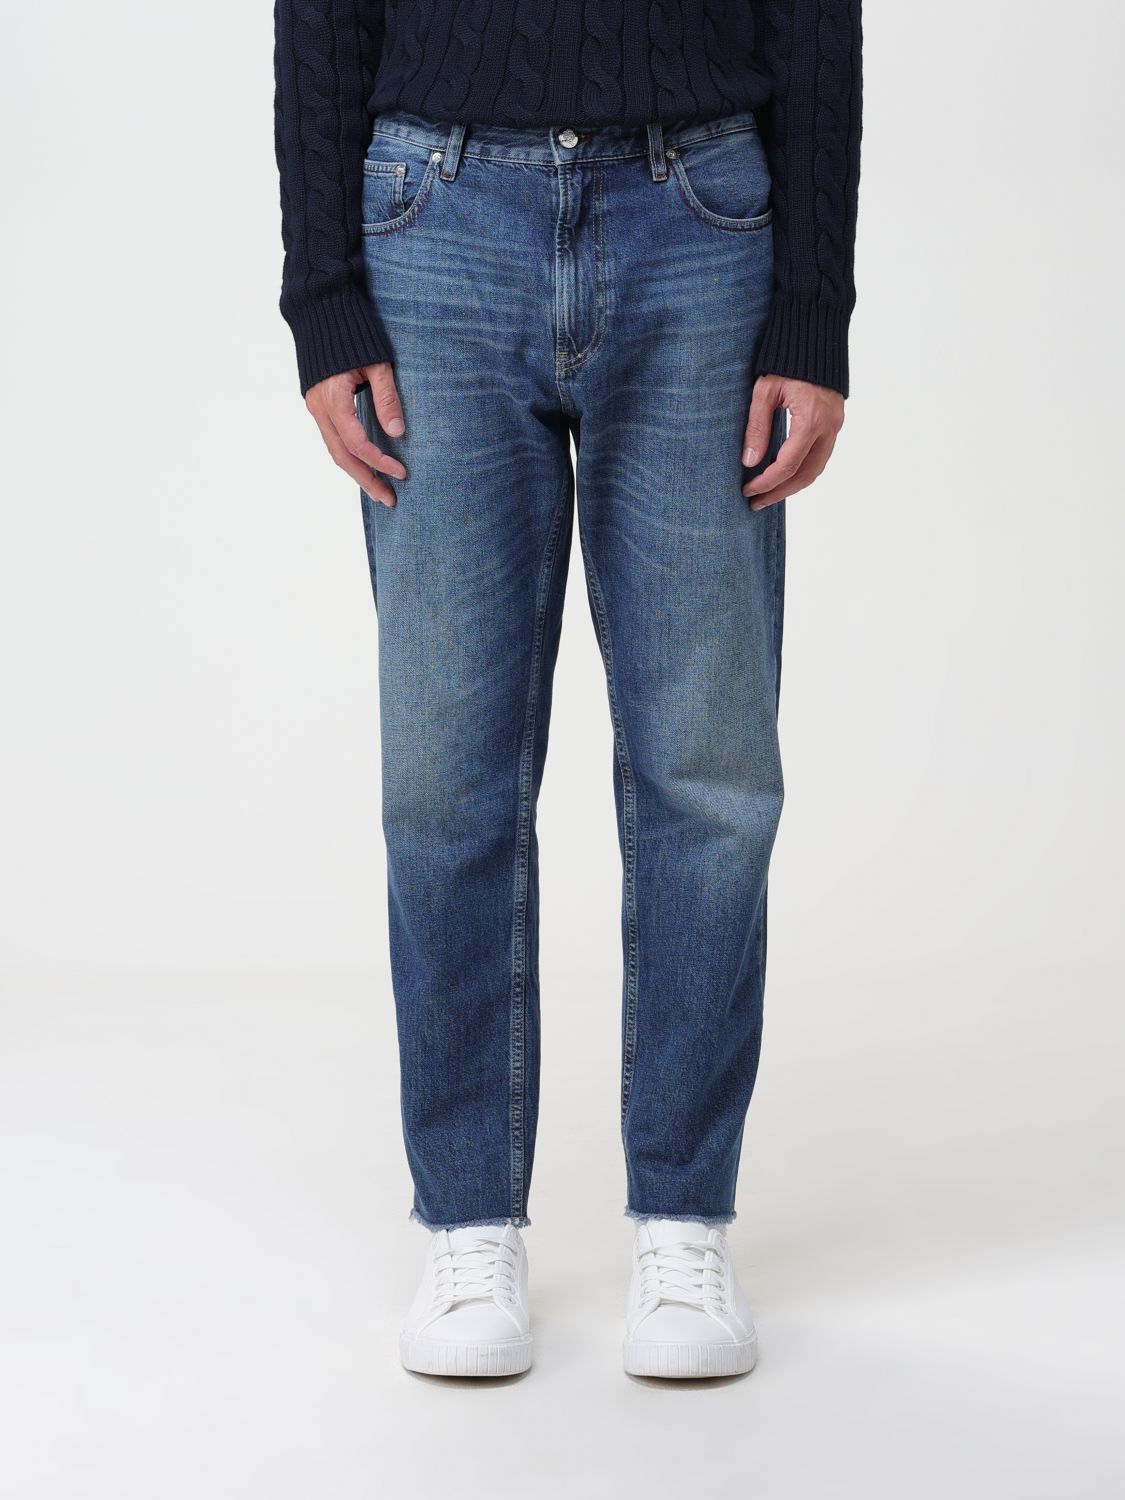 Tommy Hilfiger Collection Jeans TOMMY HILFIGER COLLECTION Men colour Denim